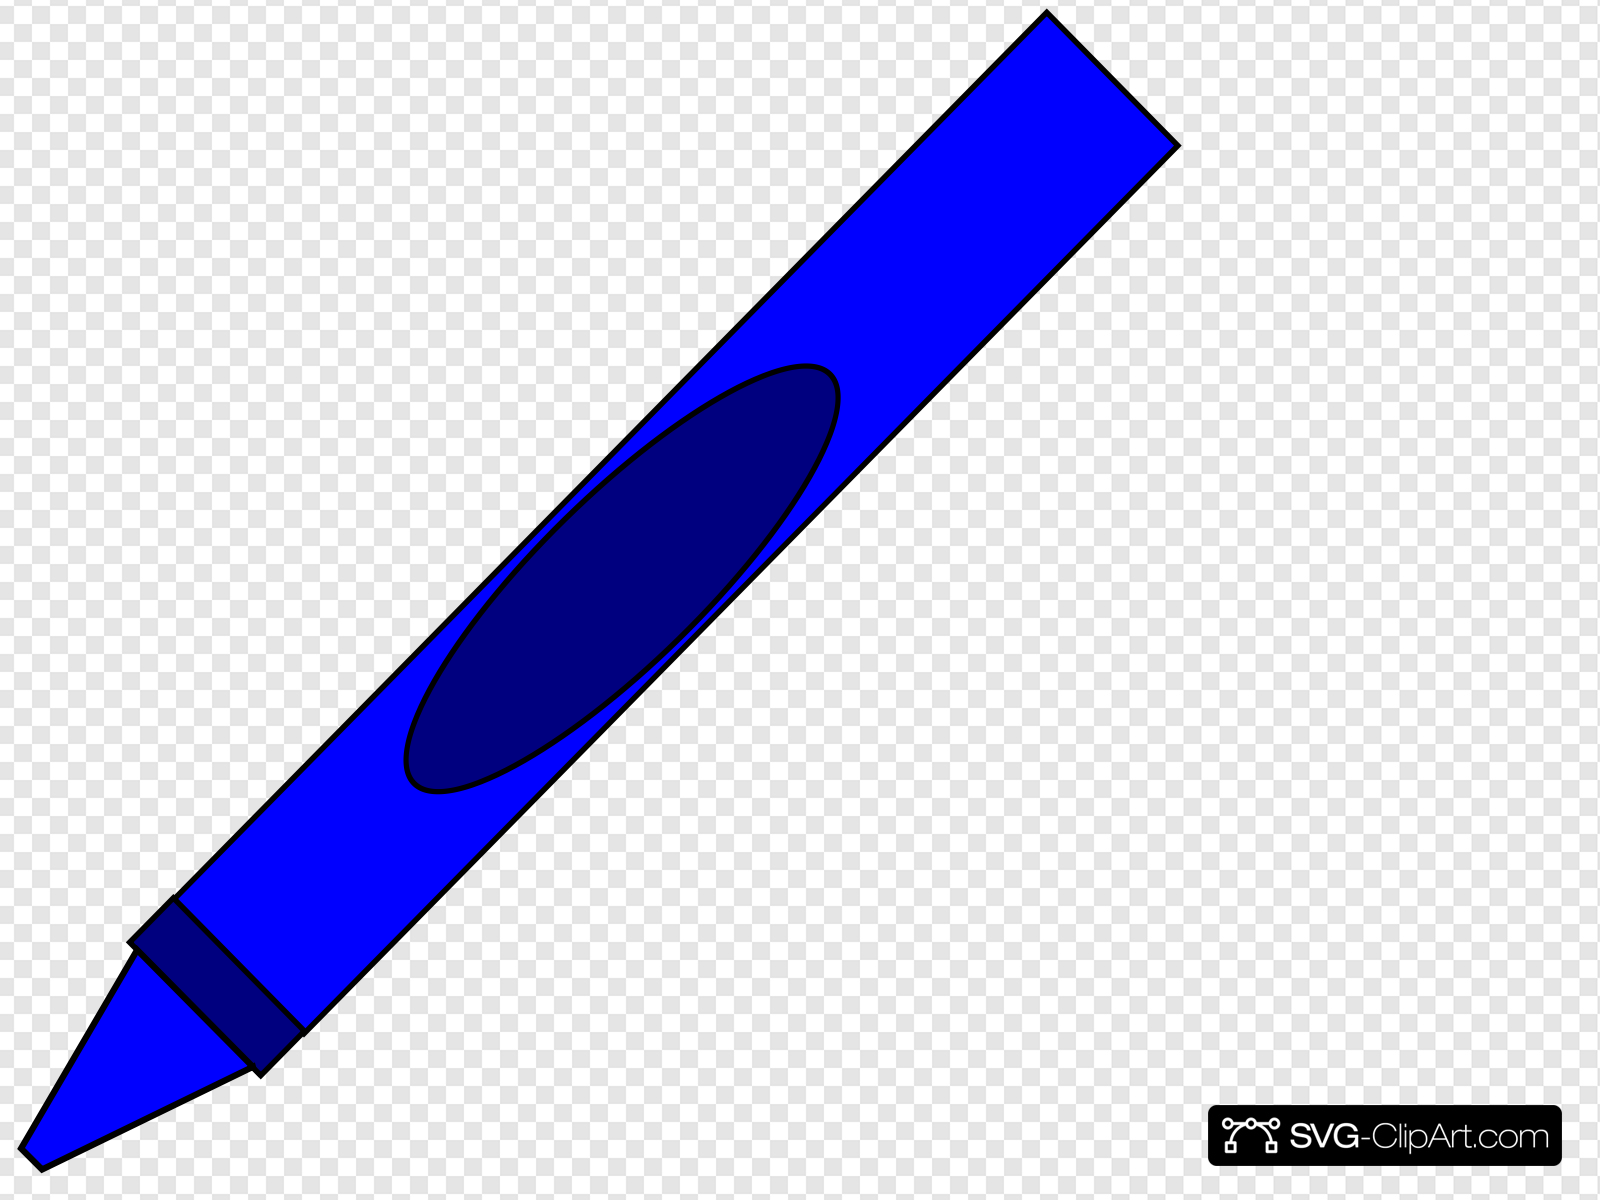 Totetude Blue Crayon Clip art, Icon and SVG.